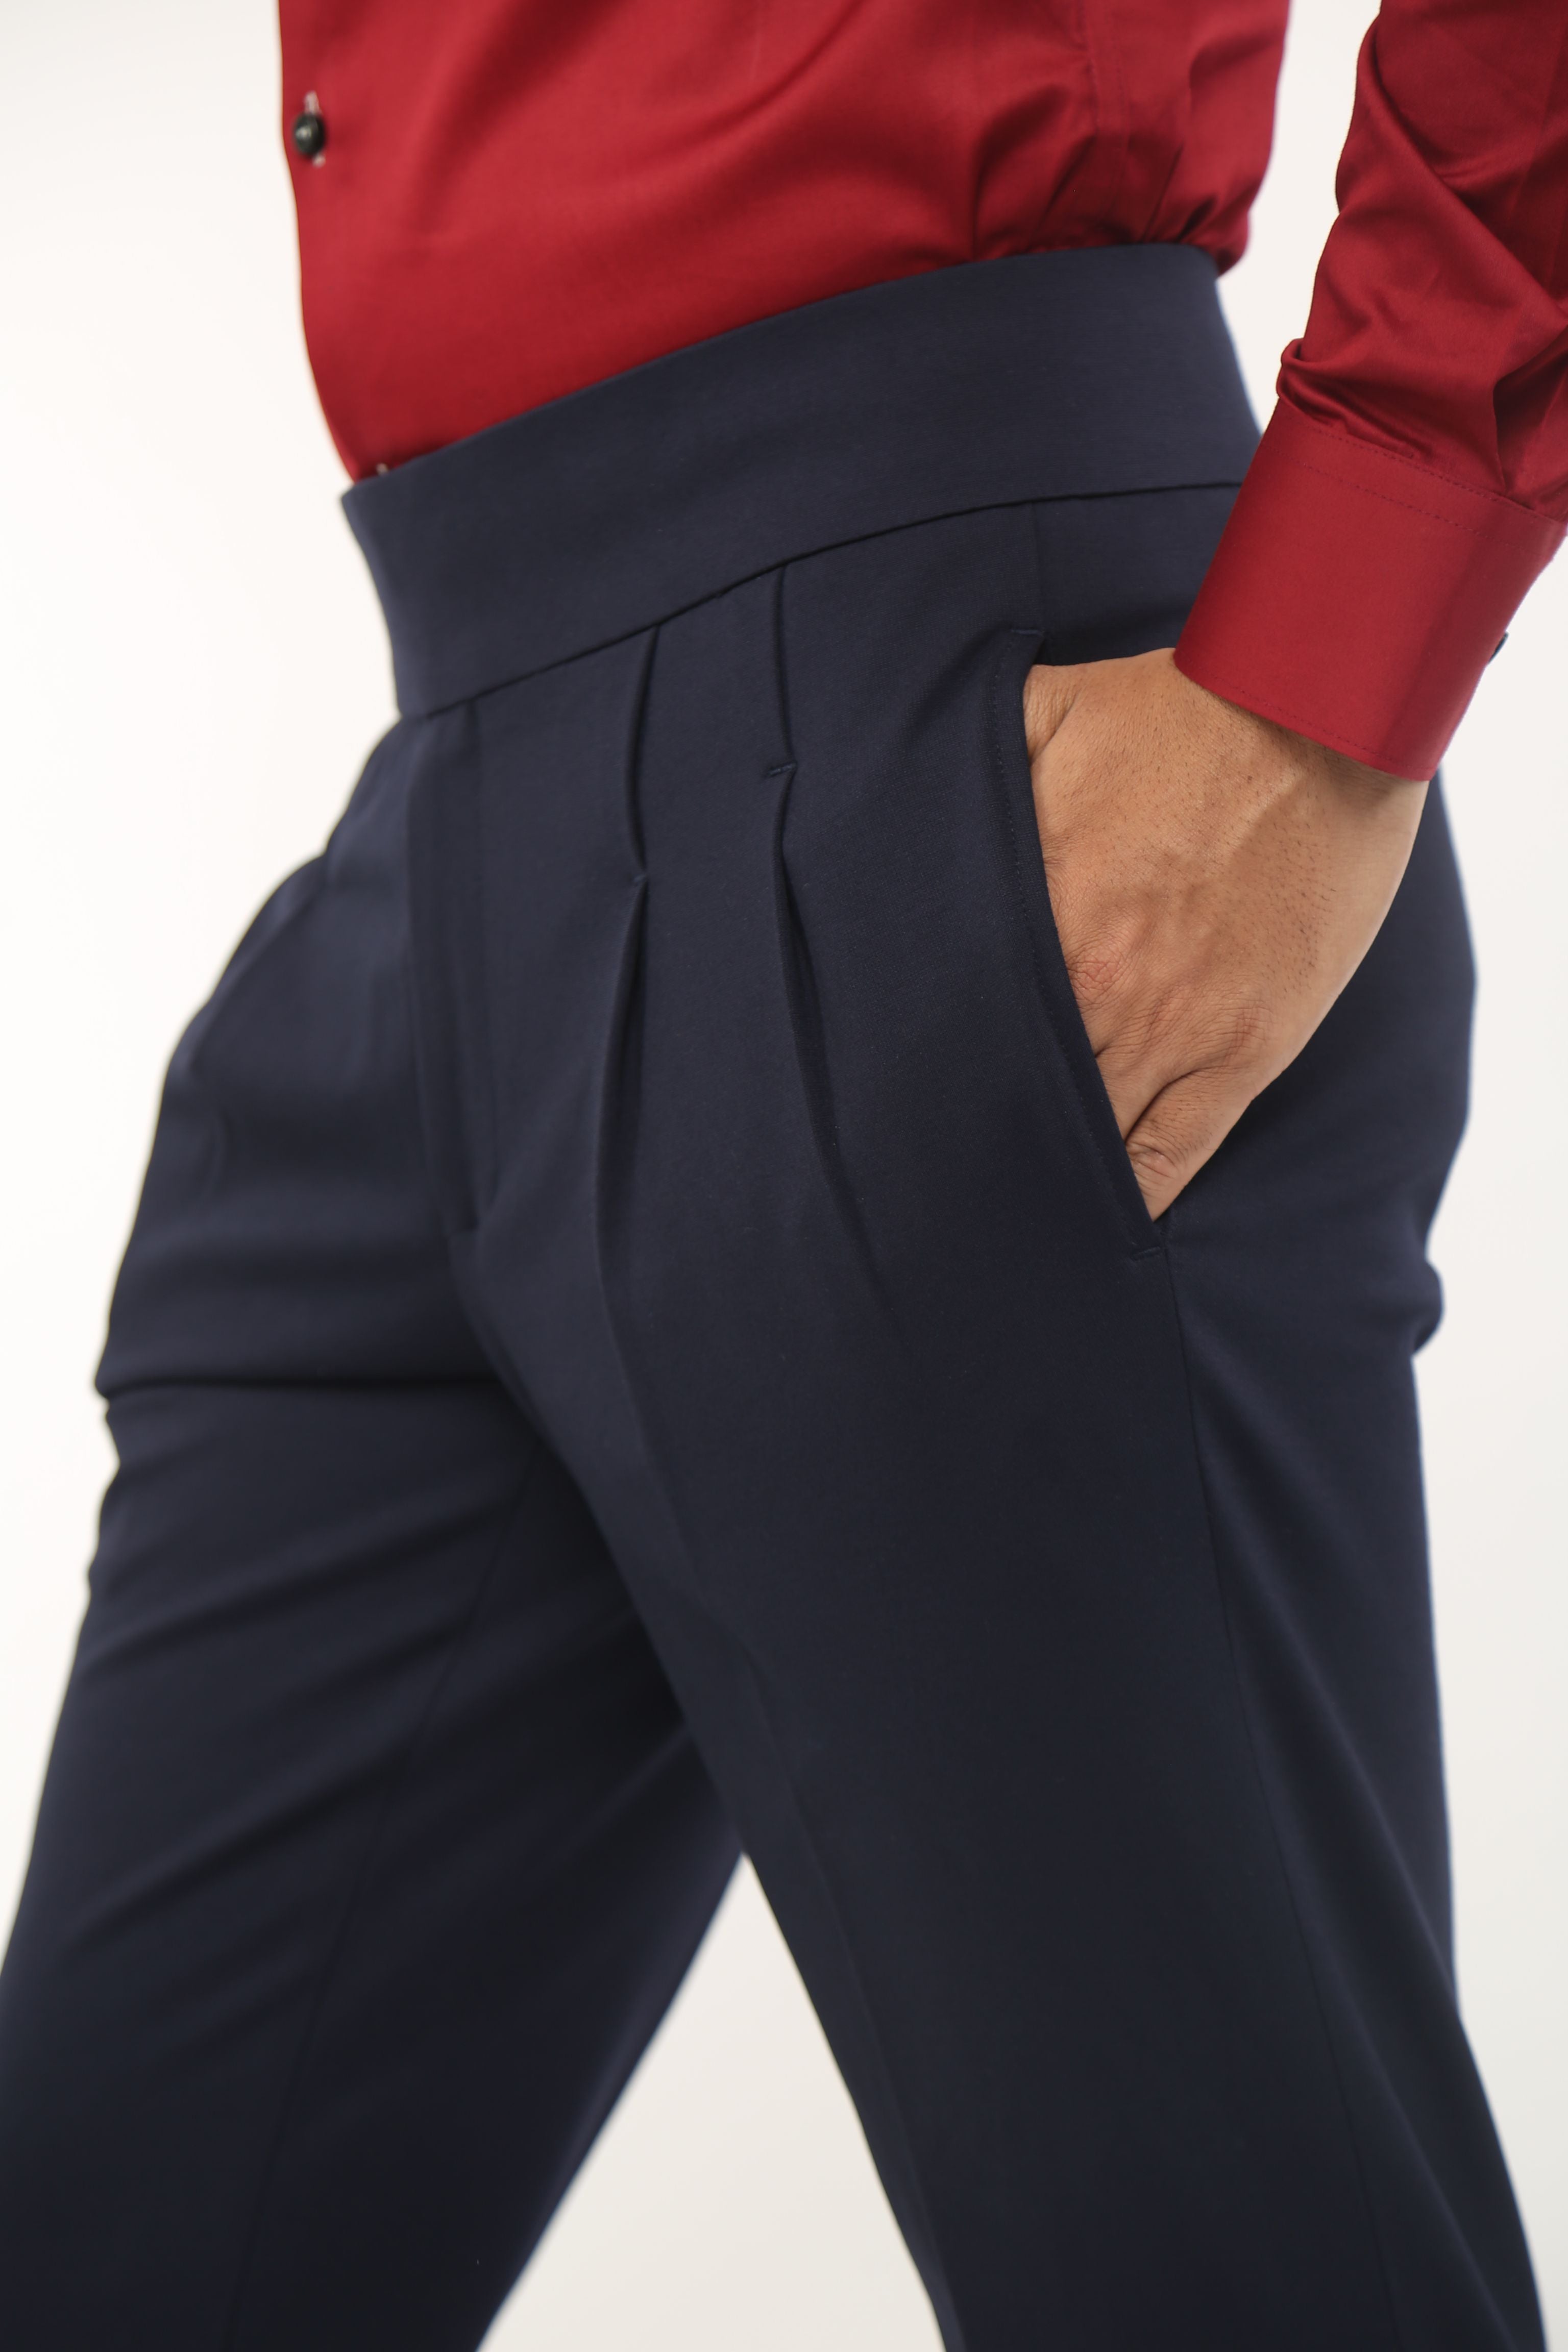 Lowkal sa - Belt less trousers/pants... Slimcuts men... | Facebook